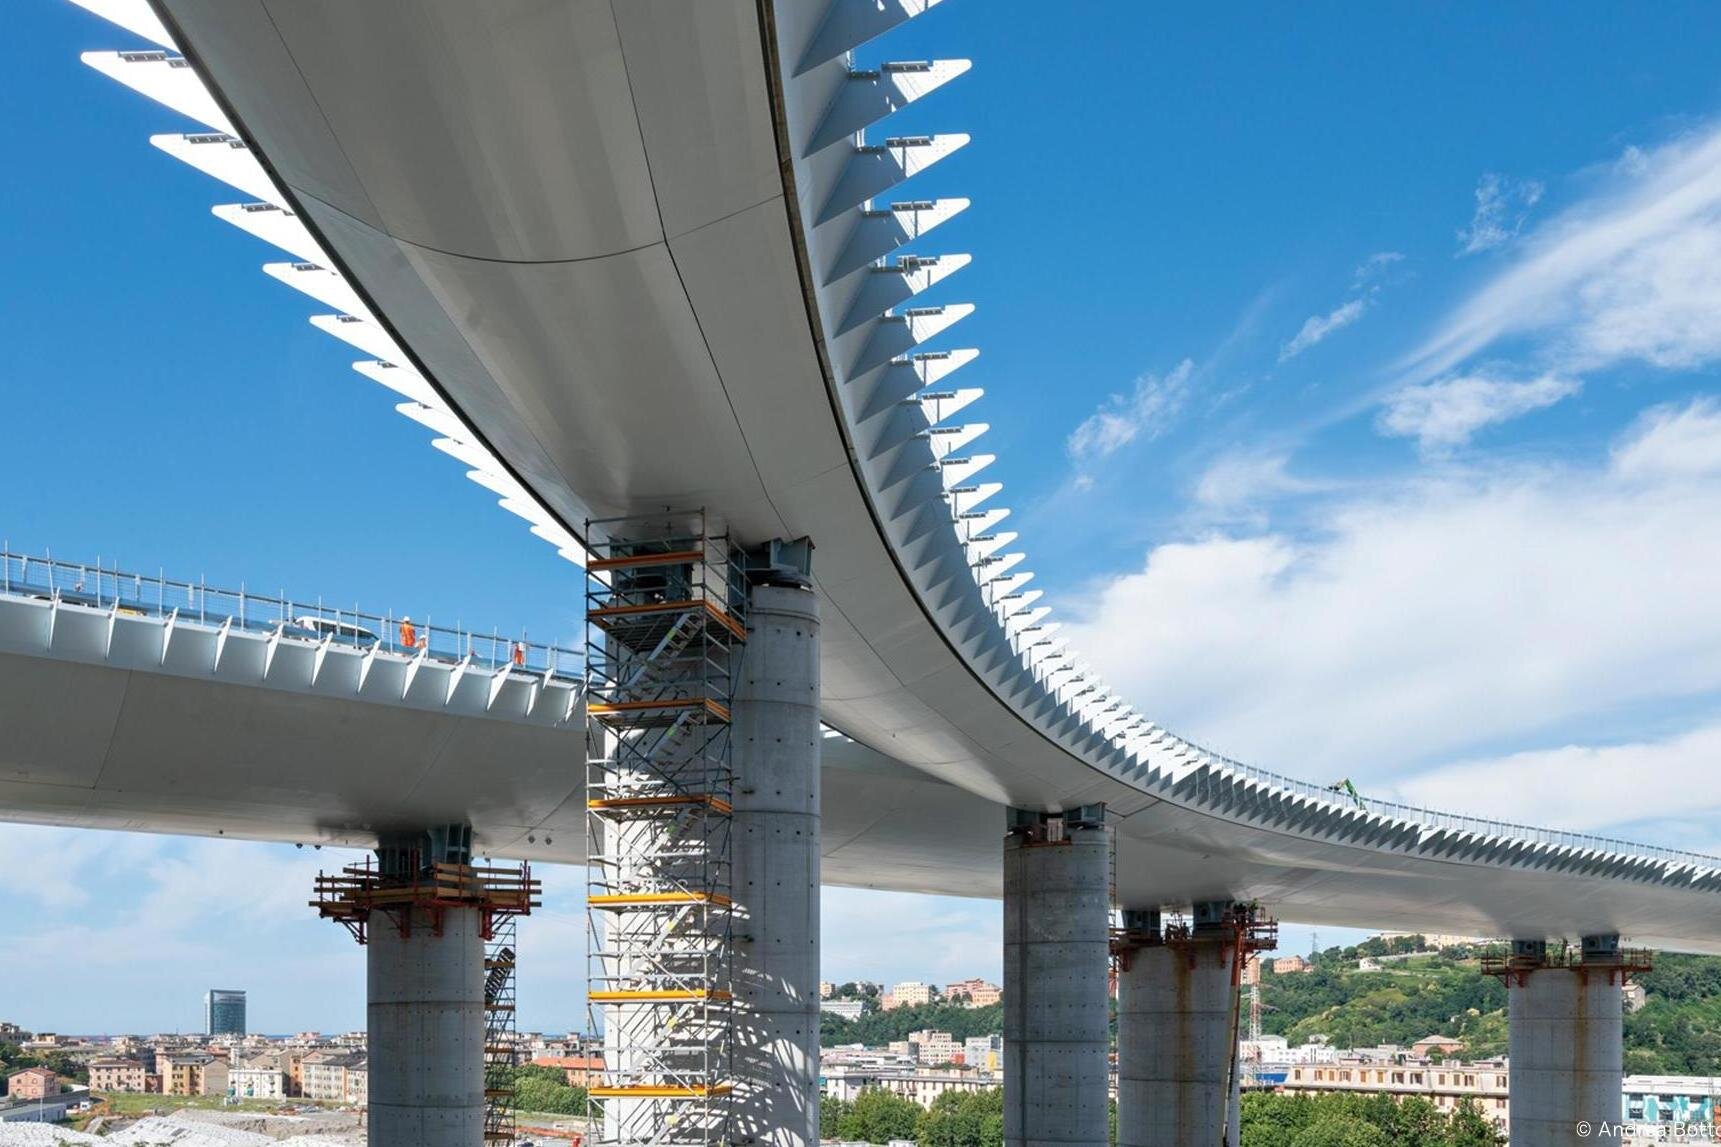 More information about "Εγκαινιάζεται η νέα γέφυρα της Γένοβας μήκους 1.064 μέτρων"